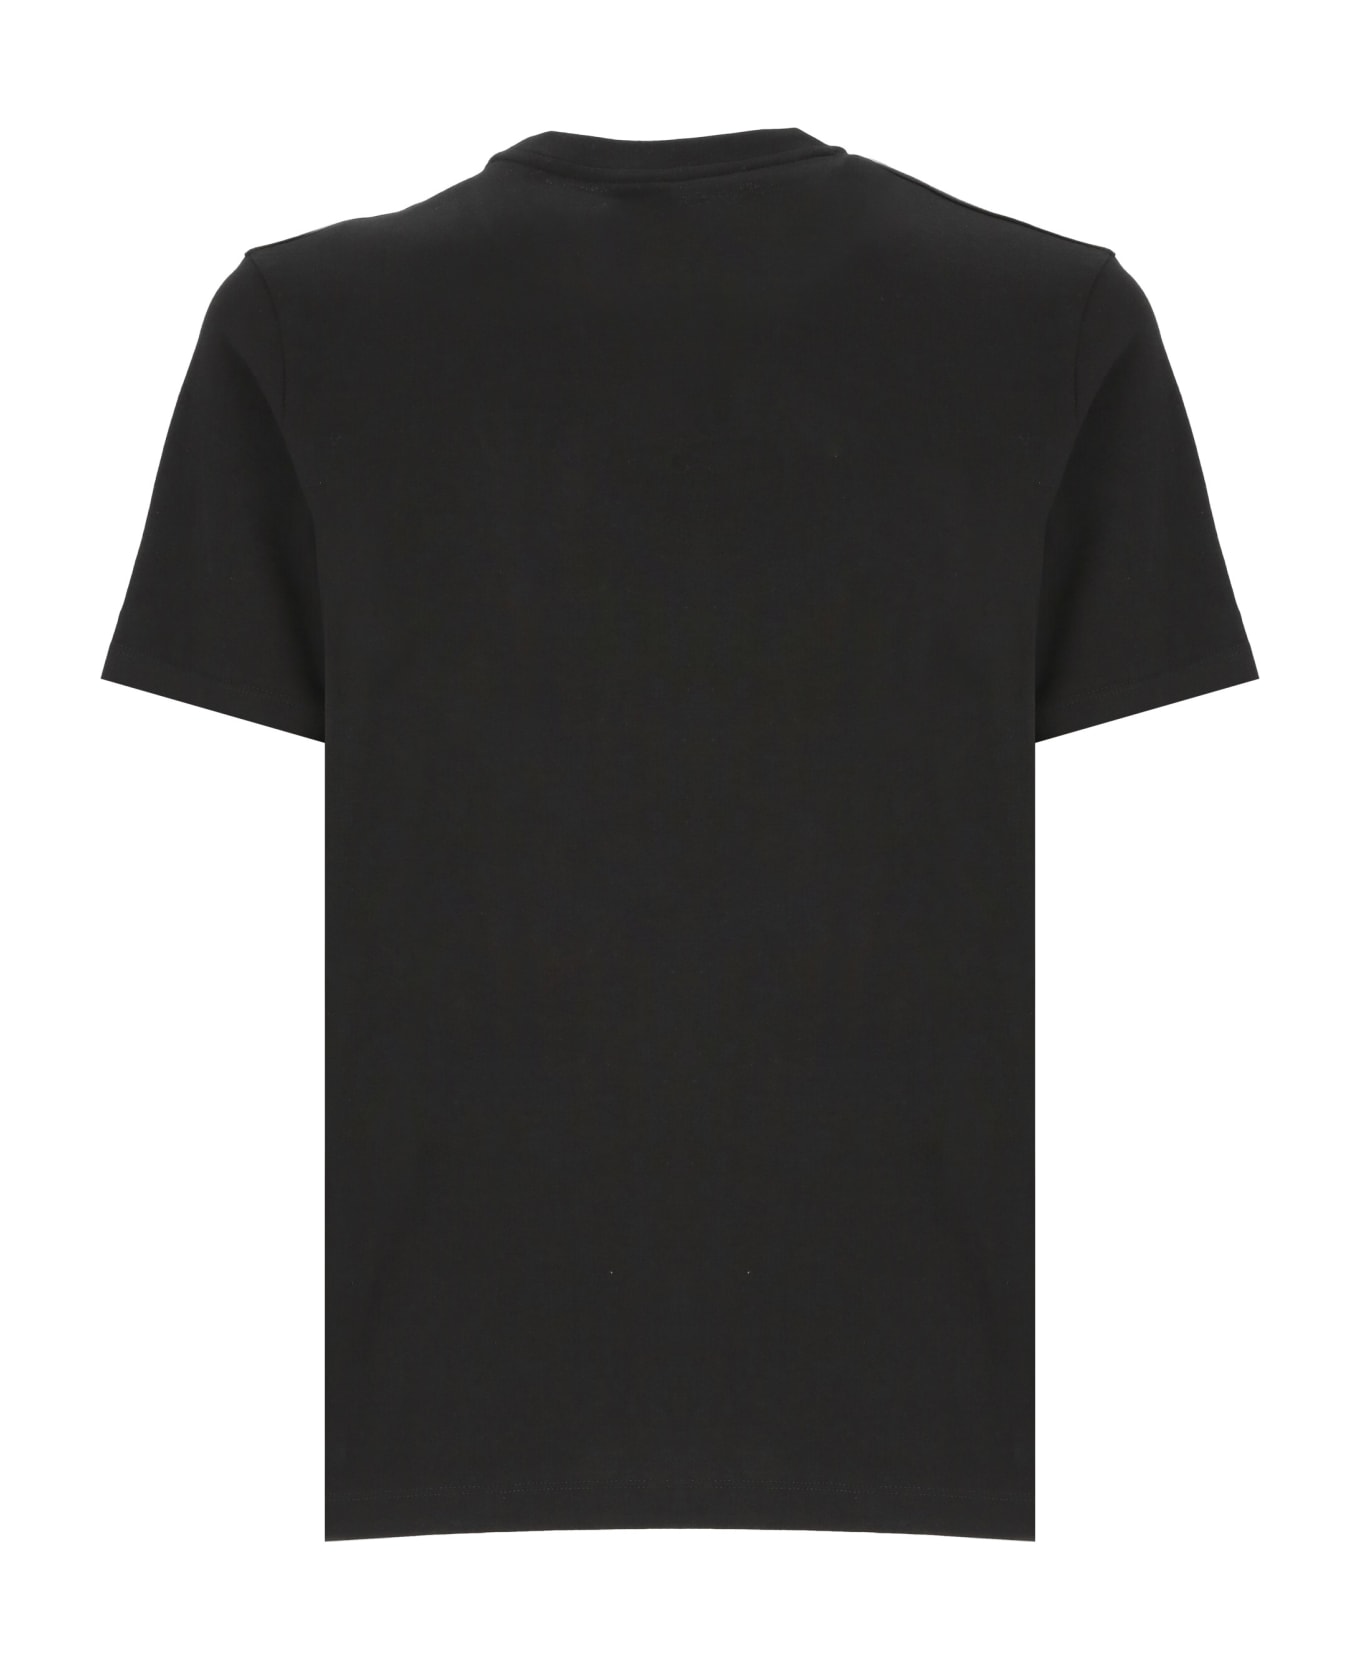 Hugo Boss Tiburt 354 T-shirt - Black